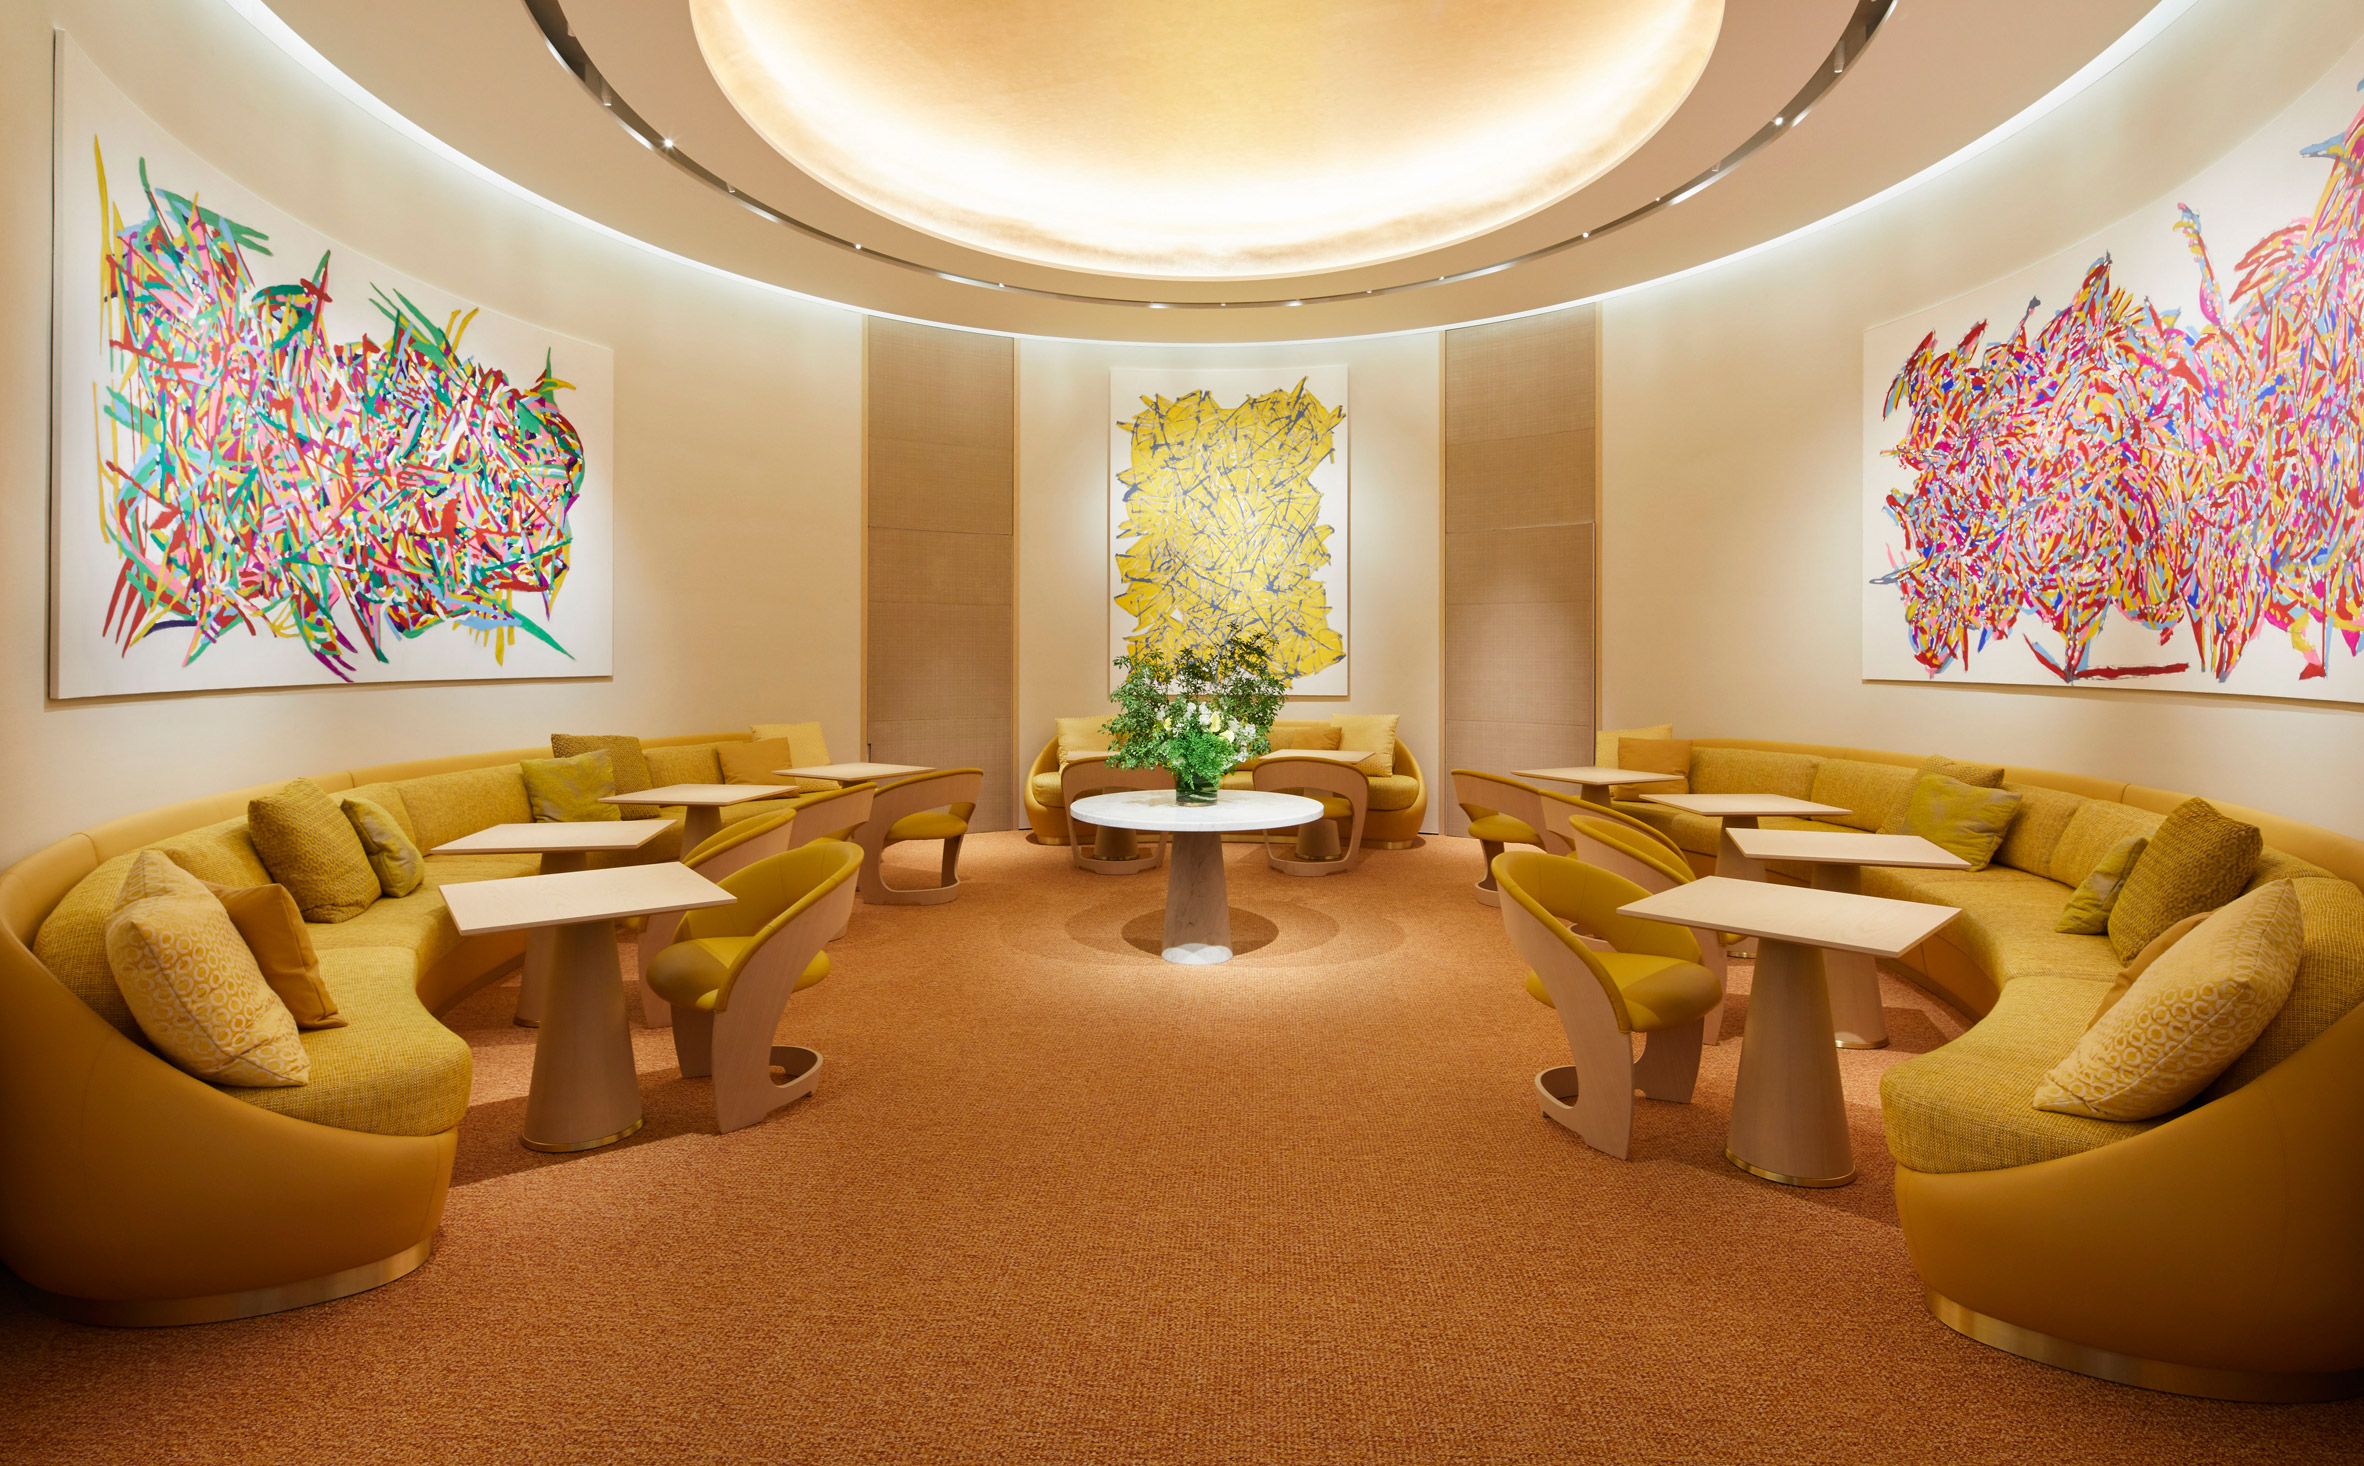 Le Cafe V inside Louis Vuitton's Osaka Midosuji store